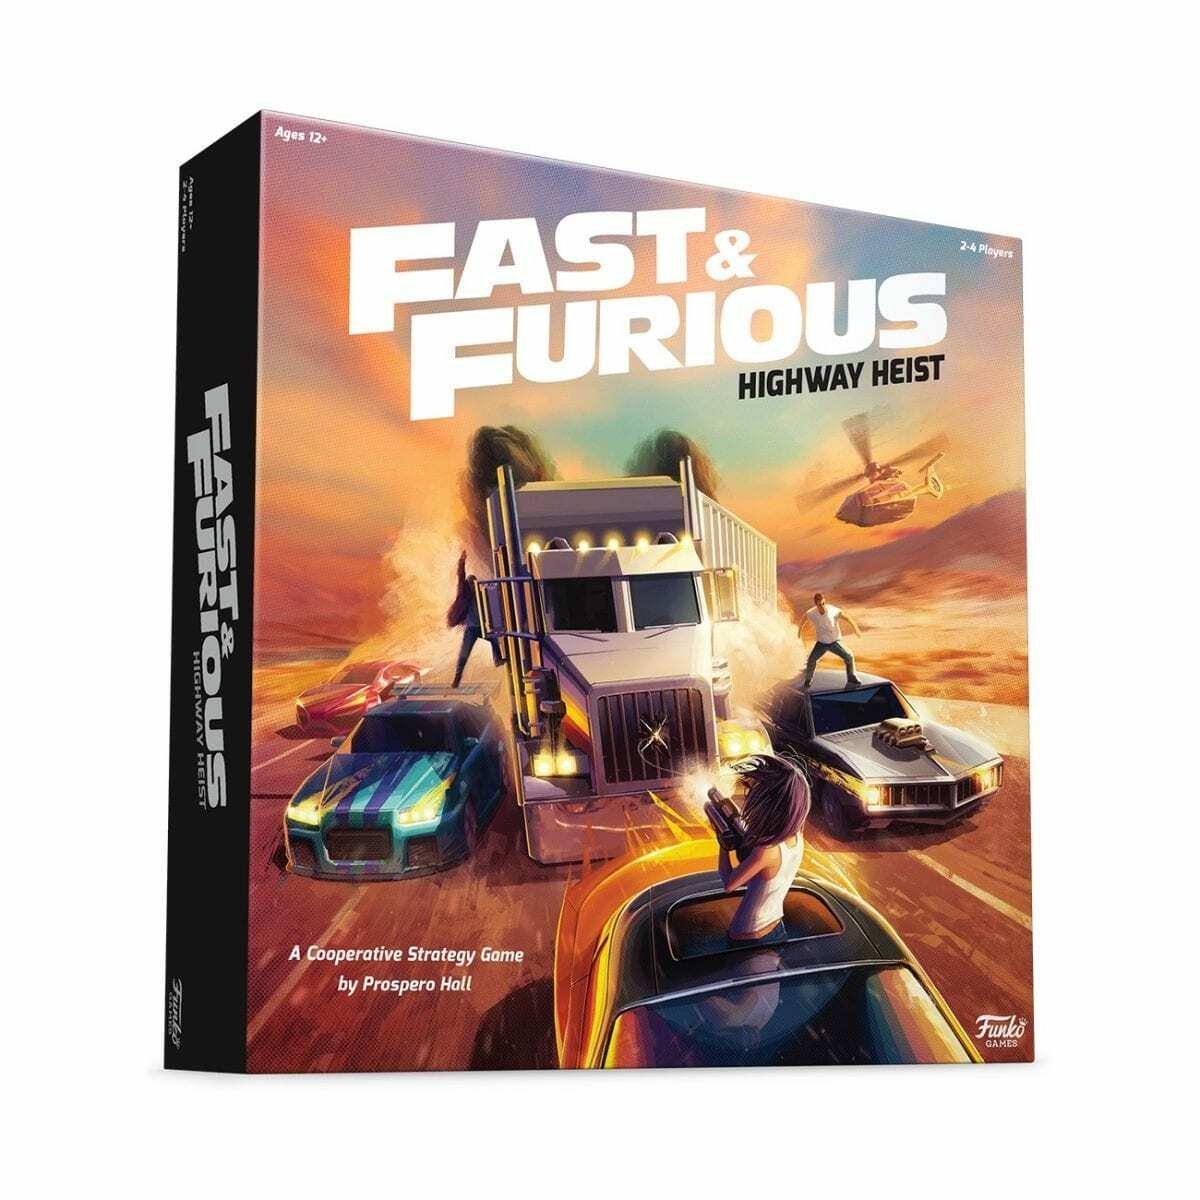 la scatola del gioco Fast & Furious: Highway Heist